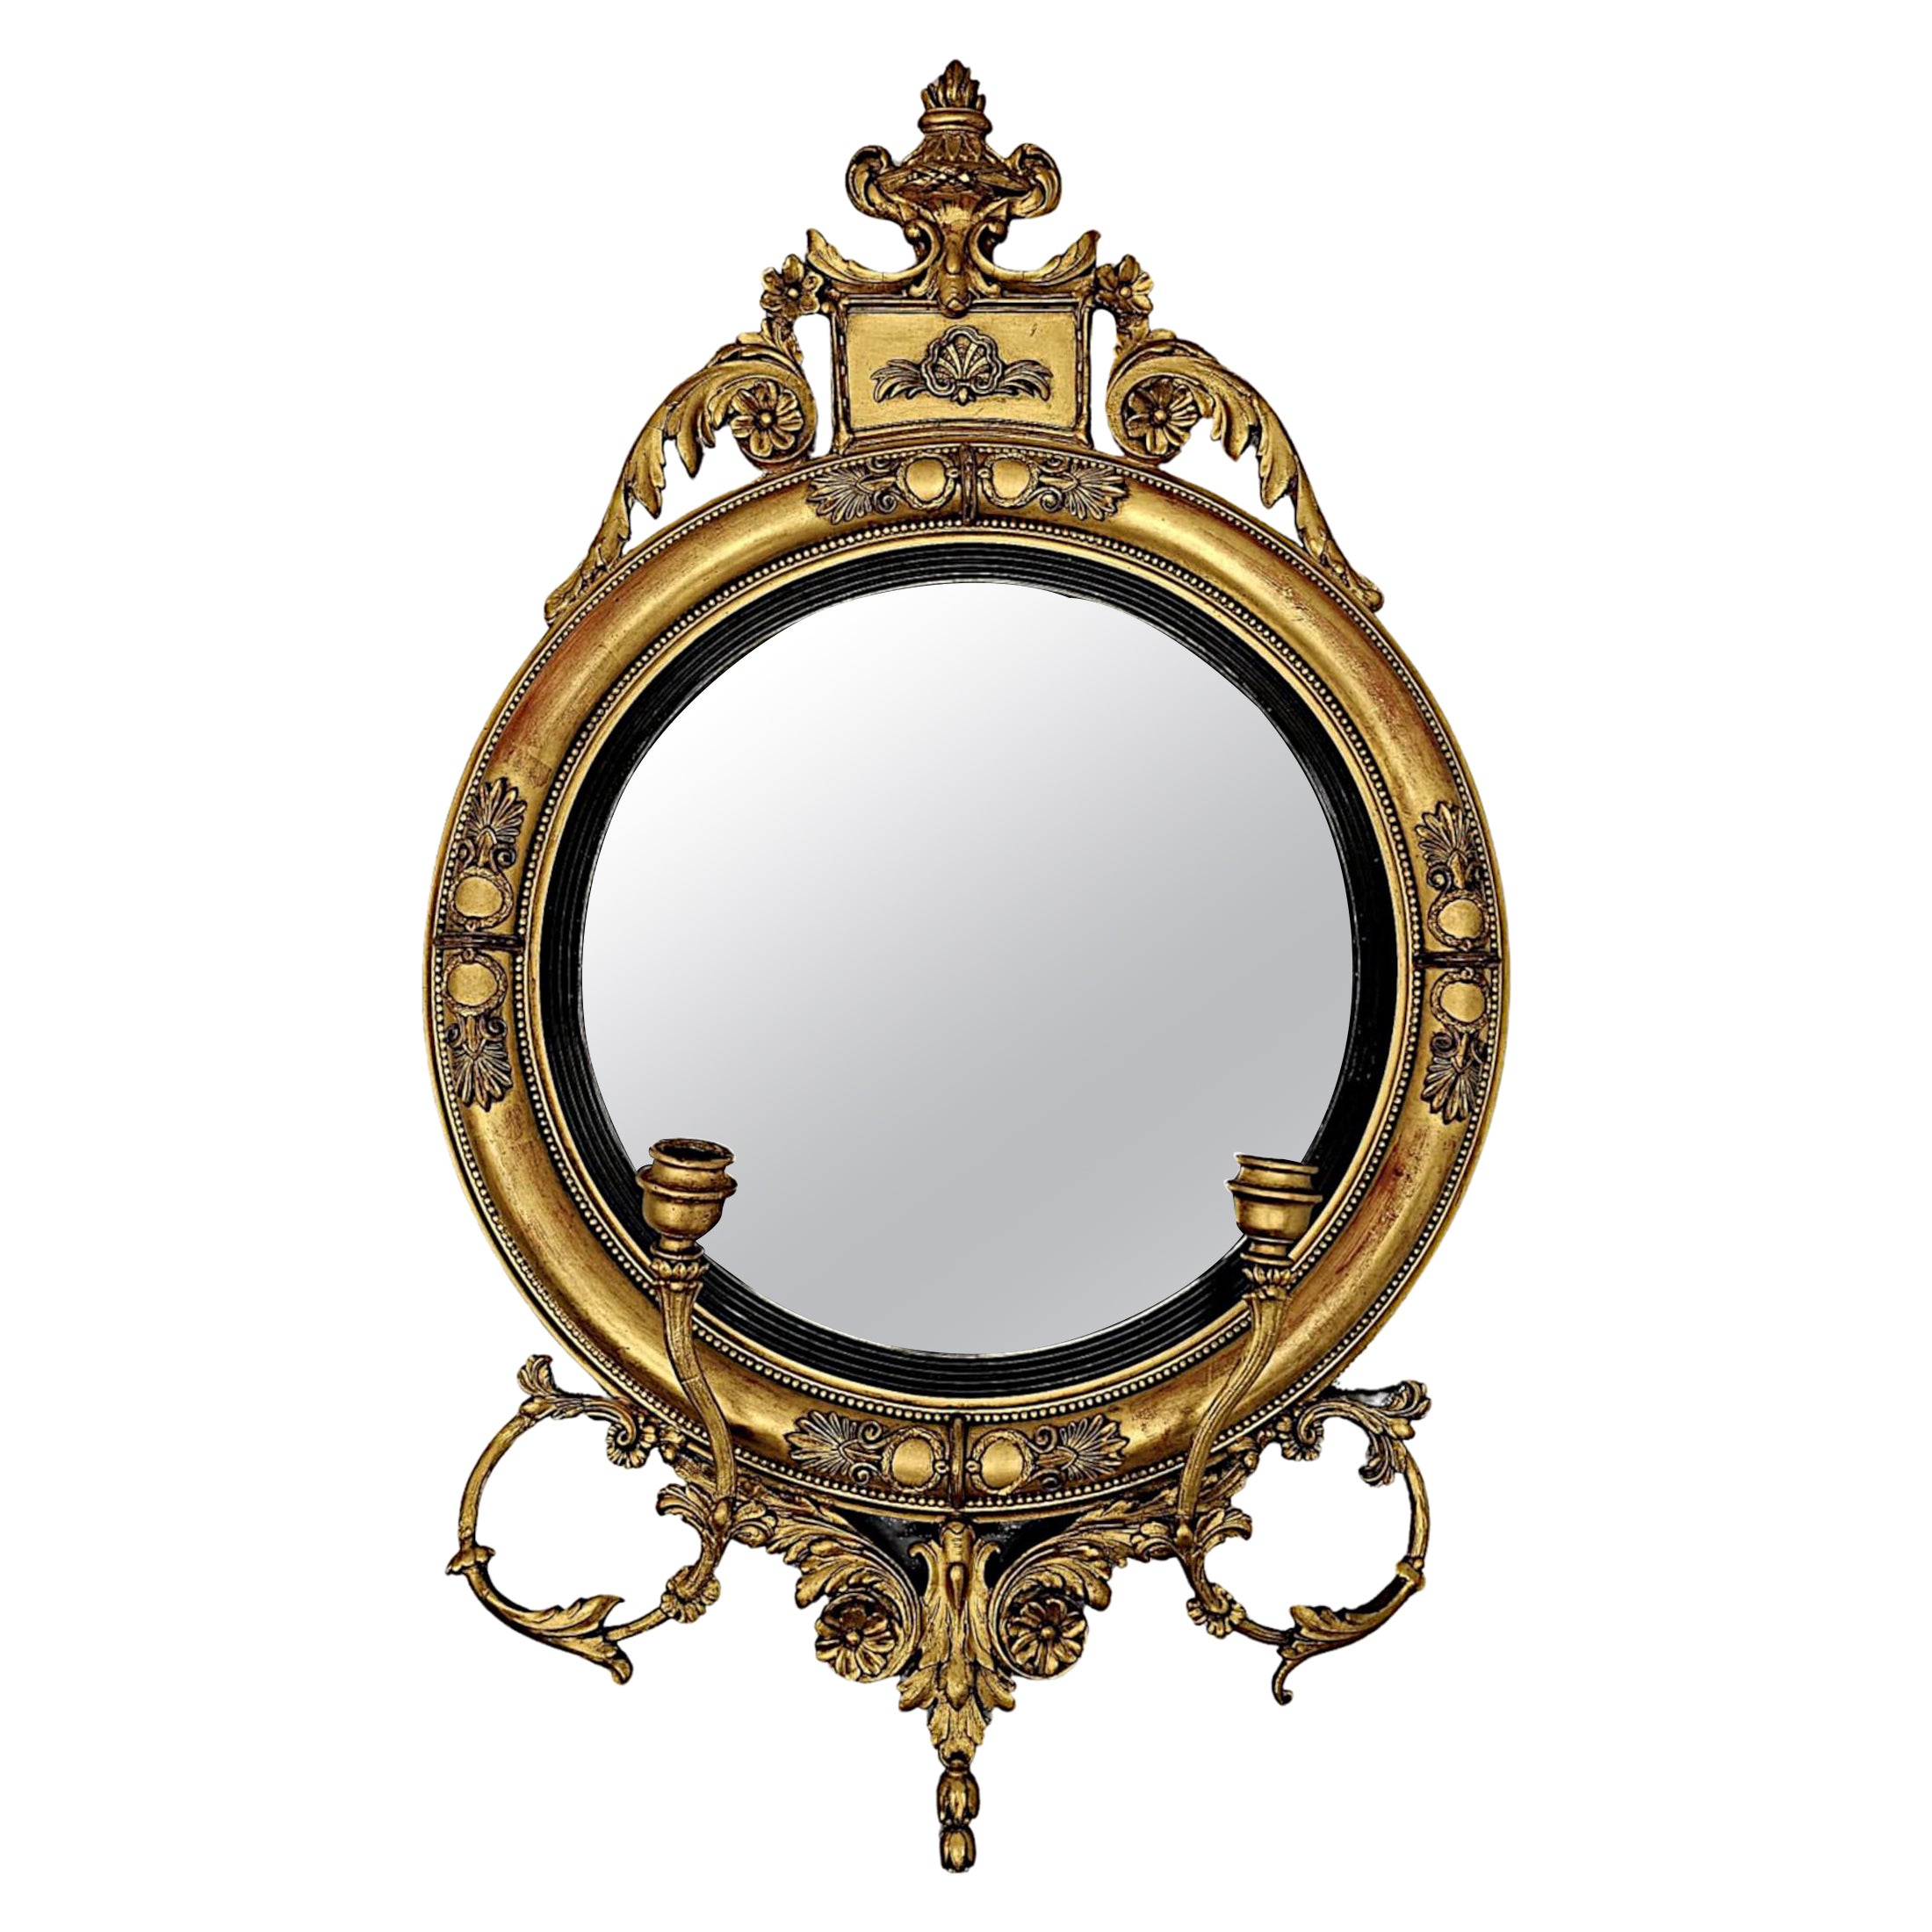  A Very Rare and Fine 19th Century Giltwood Girandole Hall or Pier Mirror